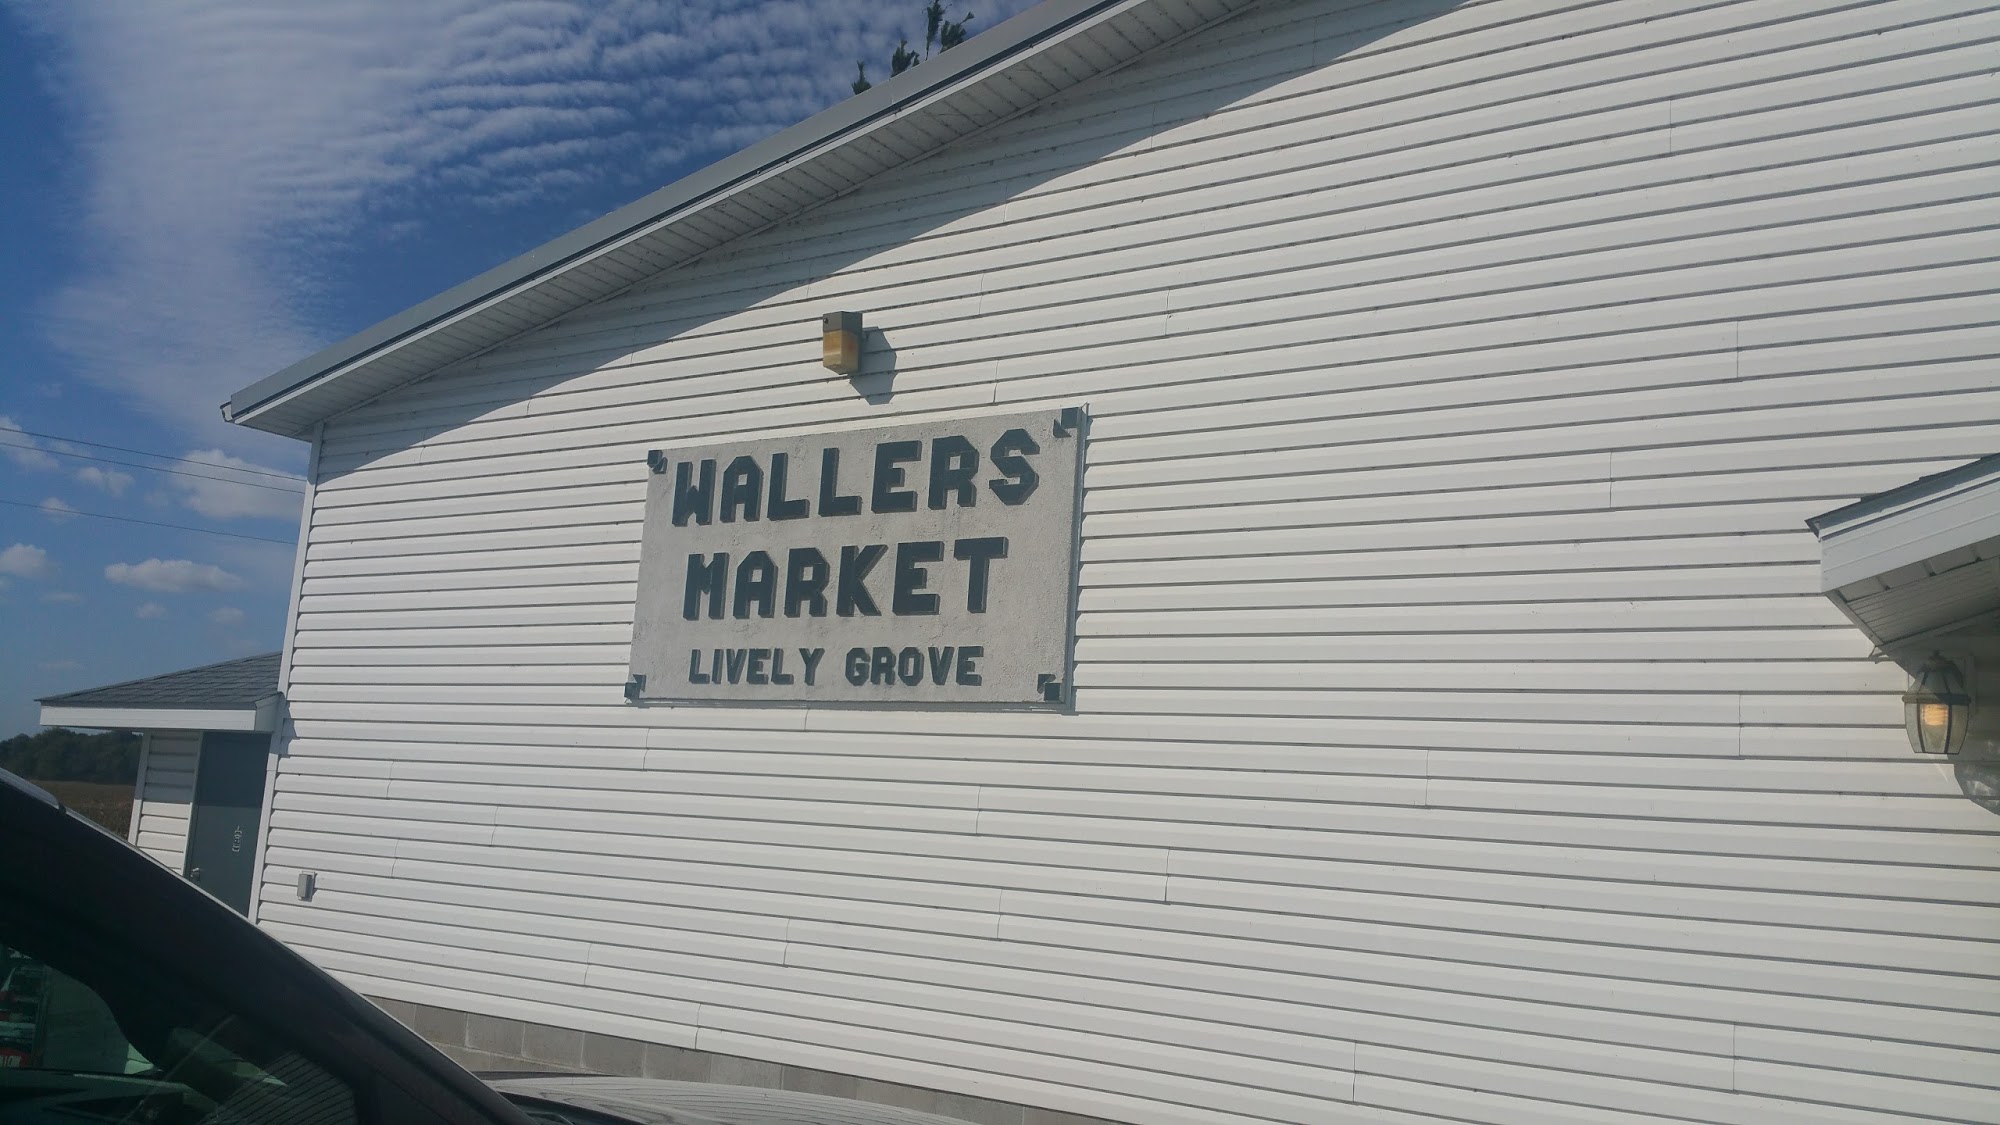 Waller's Market